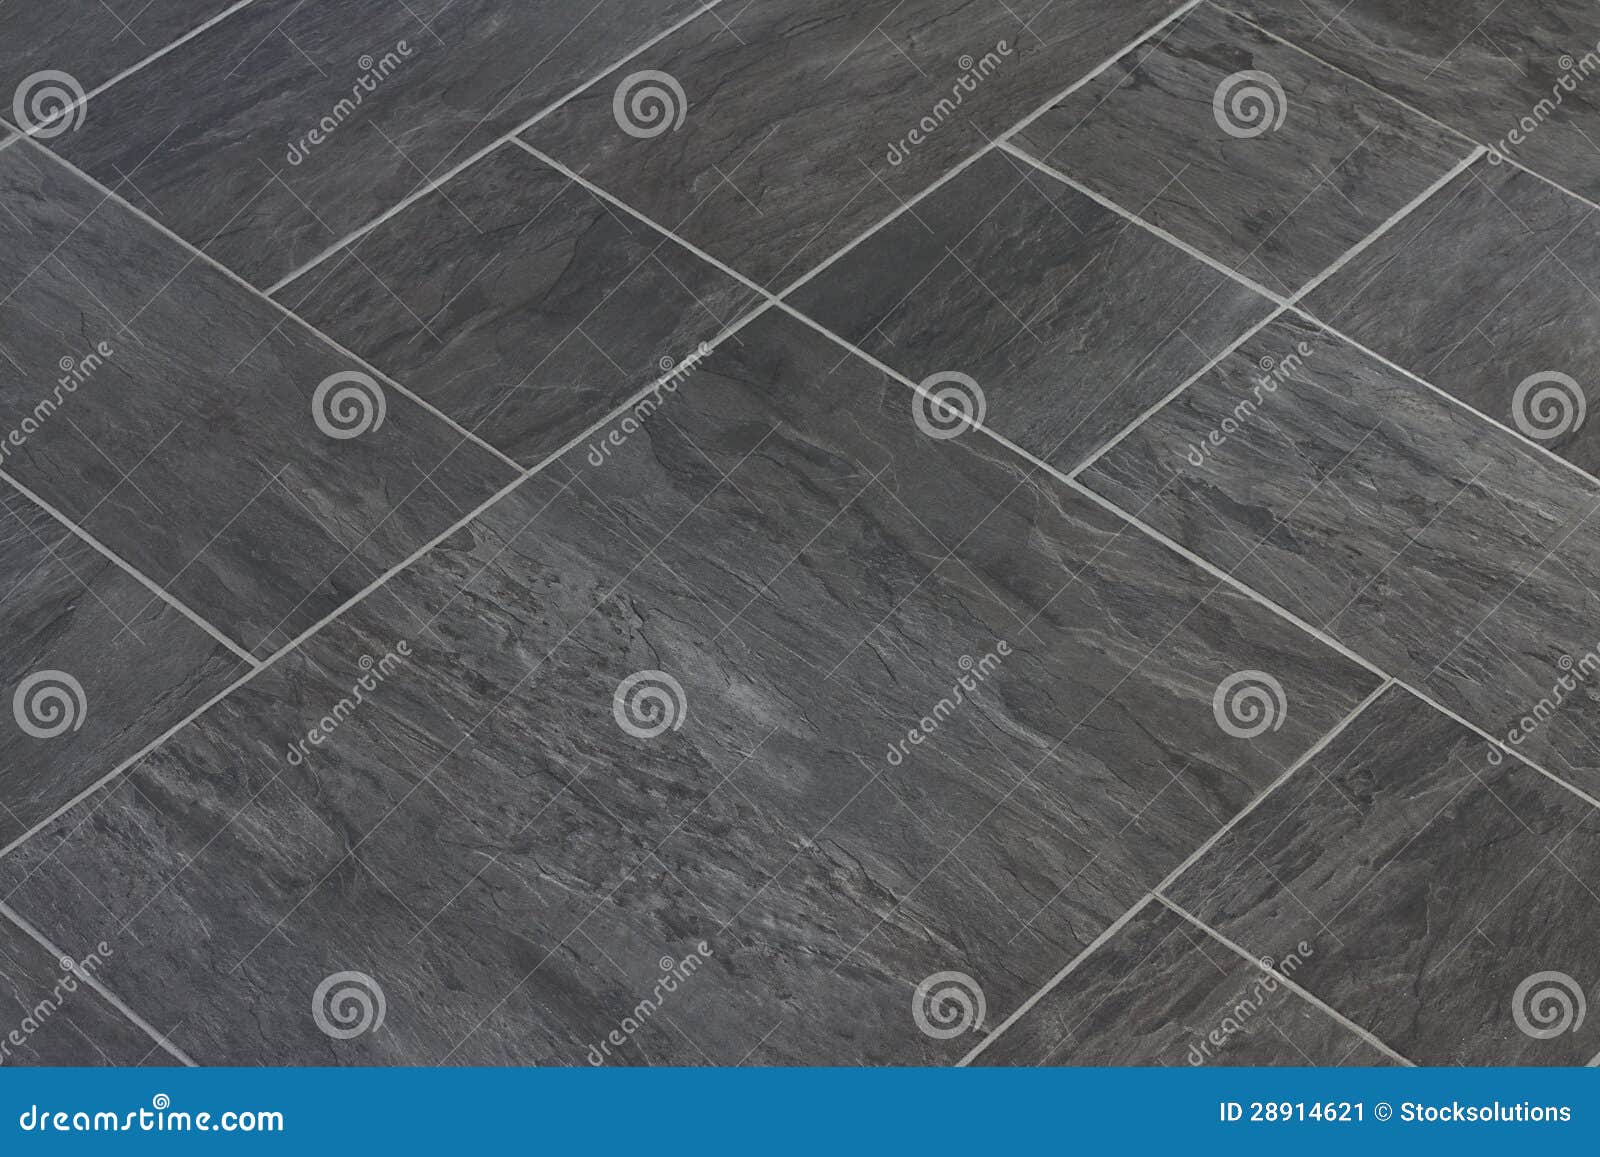 slate stone texture vinyl floor tiles